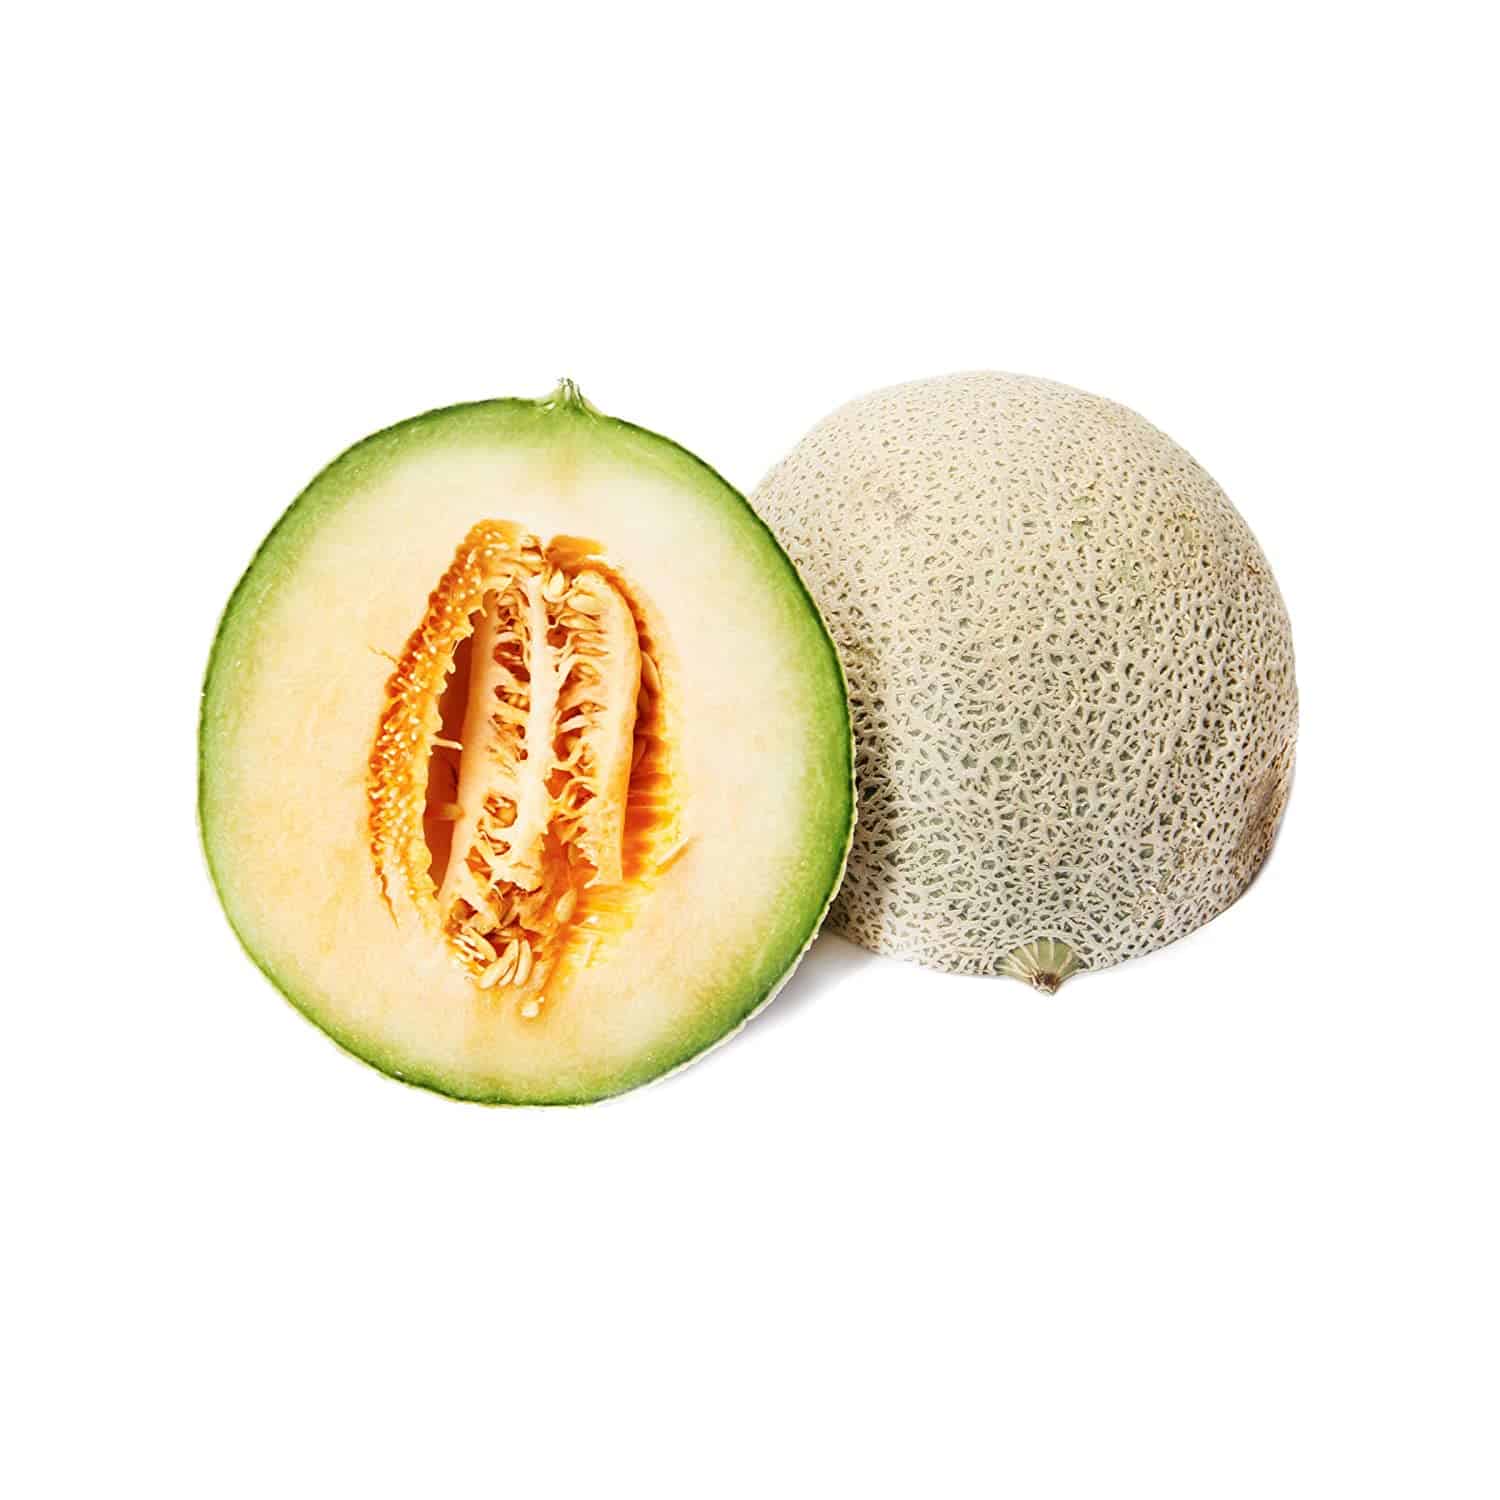 Melon Cantaloupe Organic, 1 Each